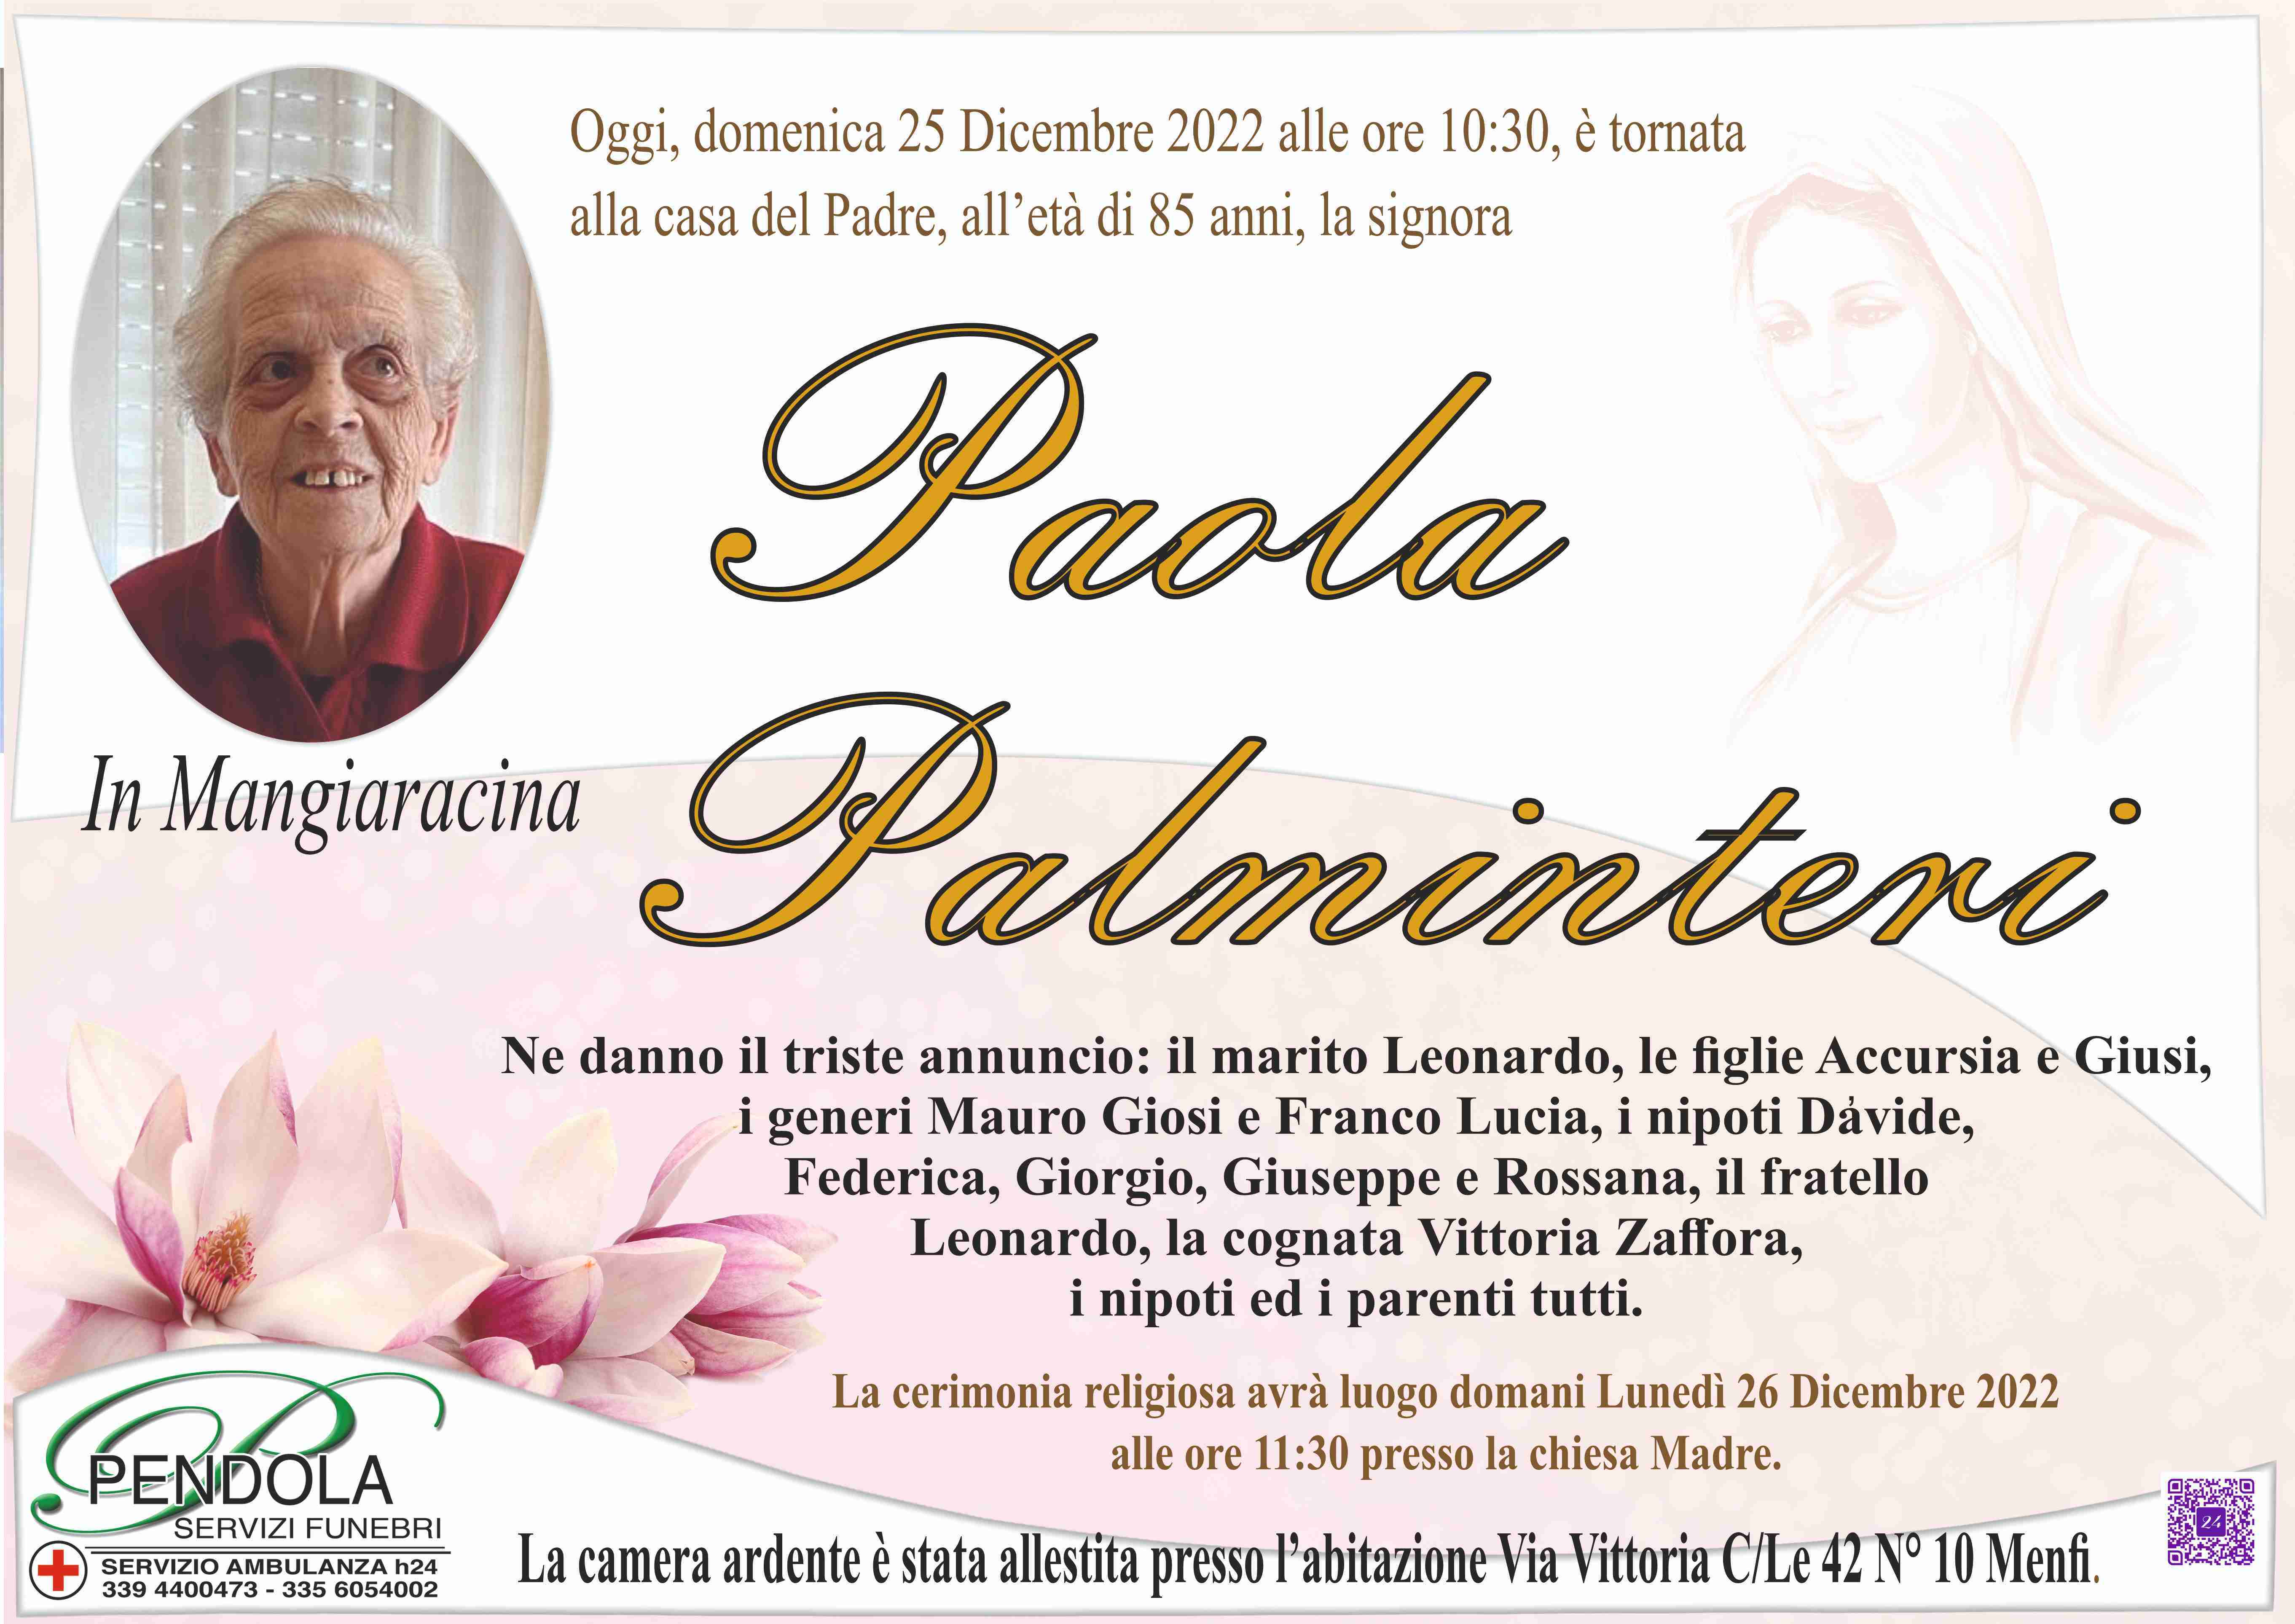 Paola Palminteri